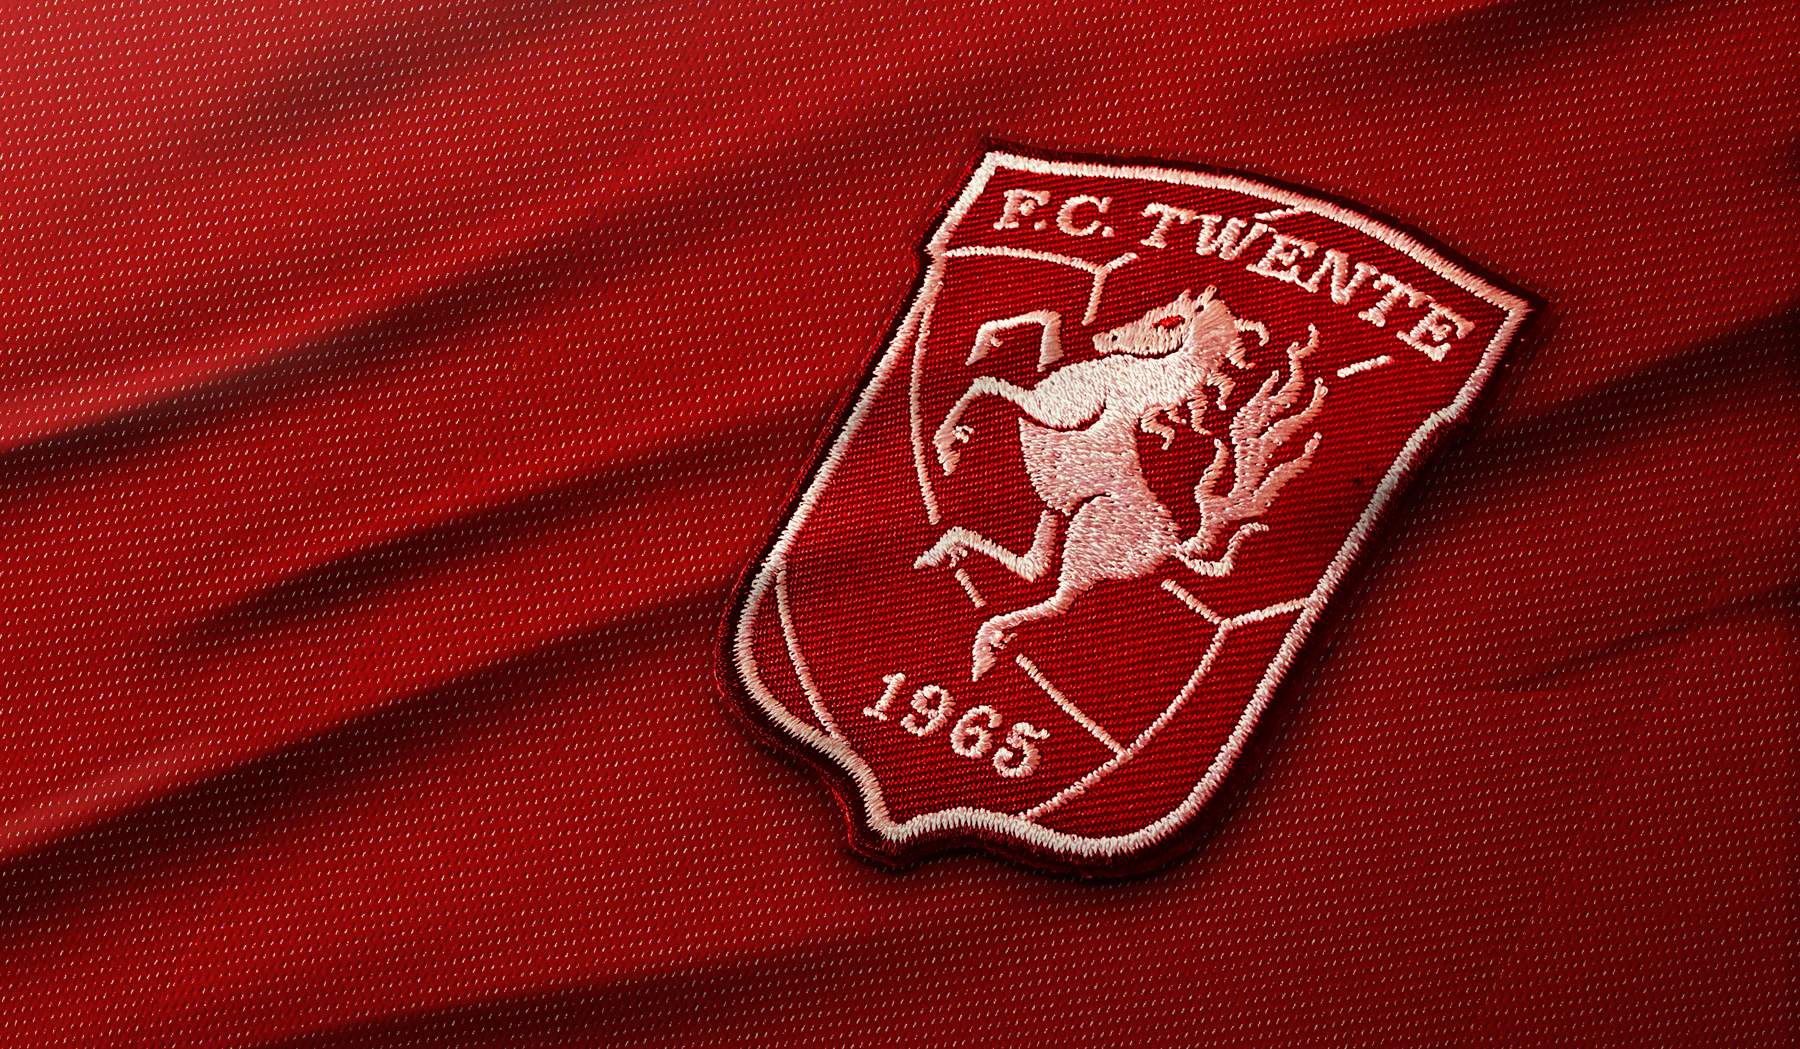 FC Twente total branding